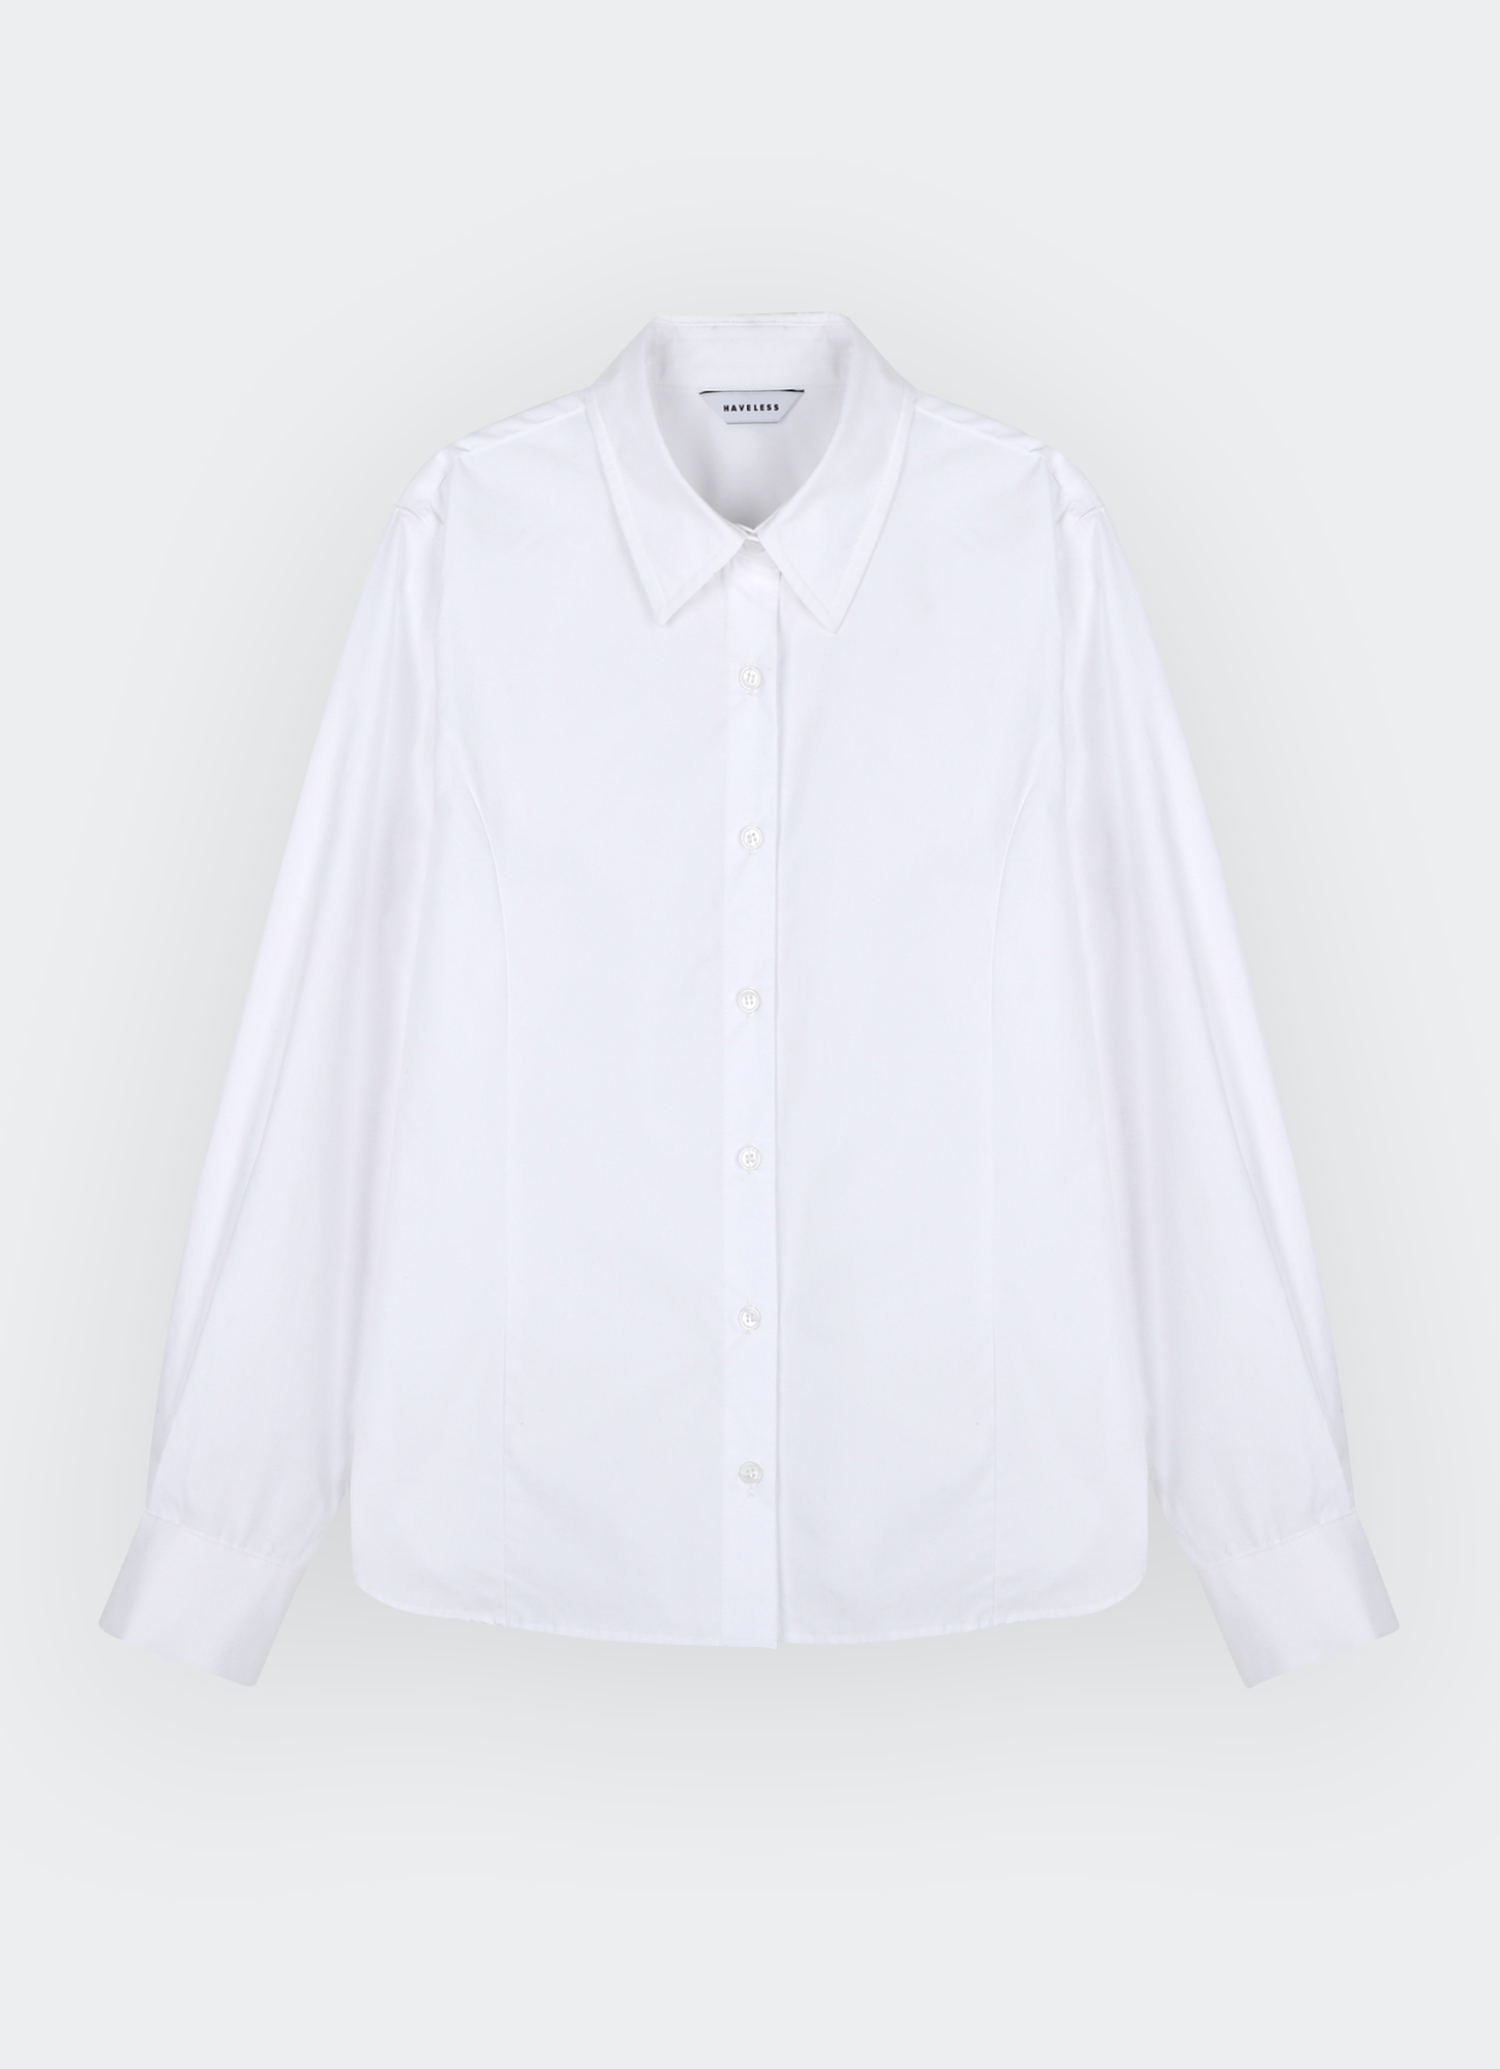 Verona Classic Cotton Shirt White